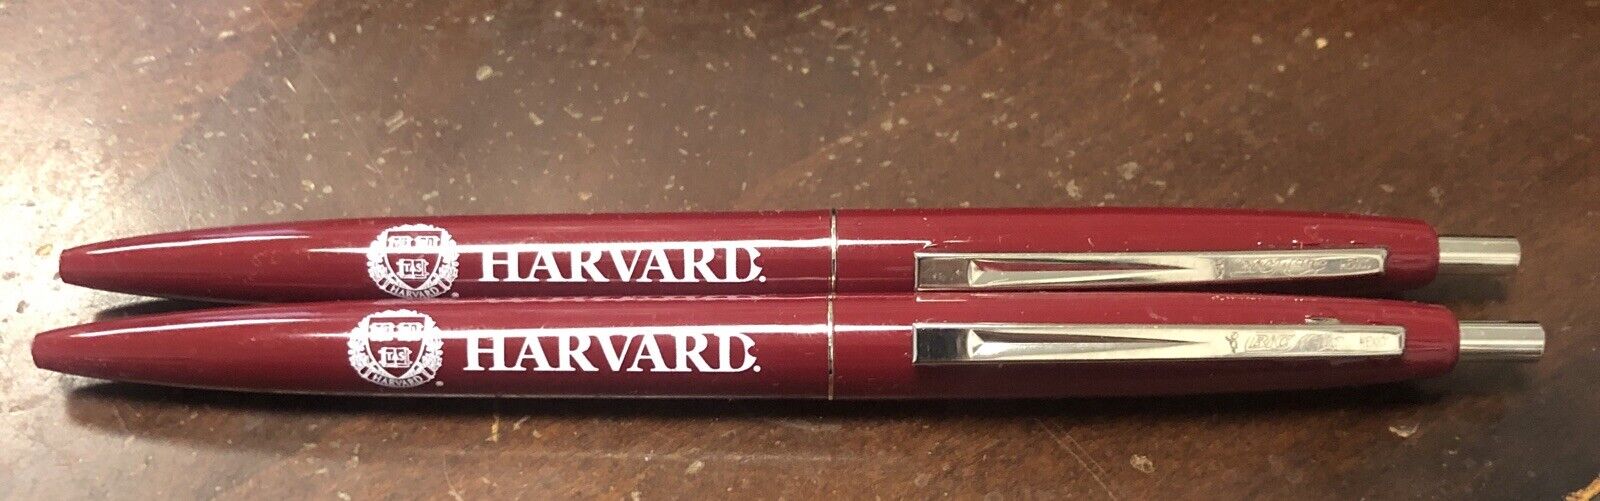 Harvard University BIC CLIC Vintage Pen (Set of 2) ⭐️ MINT